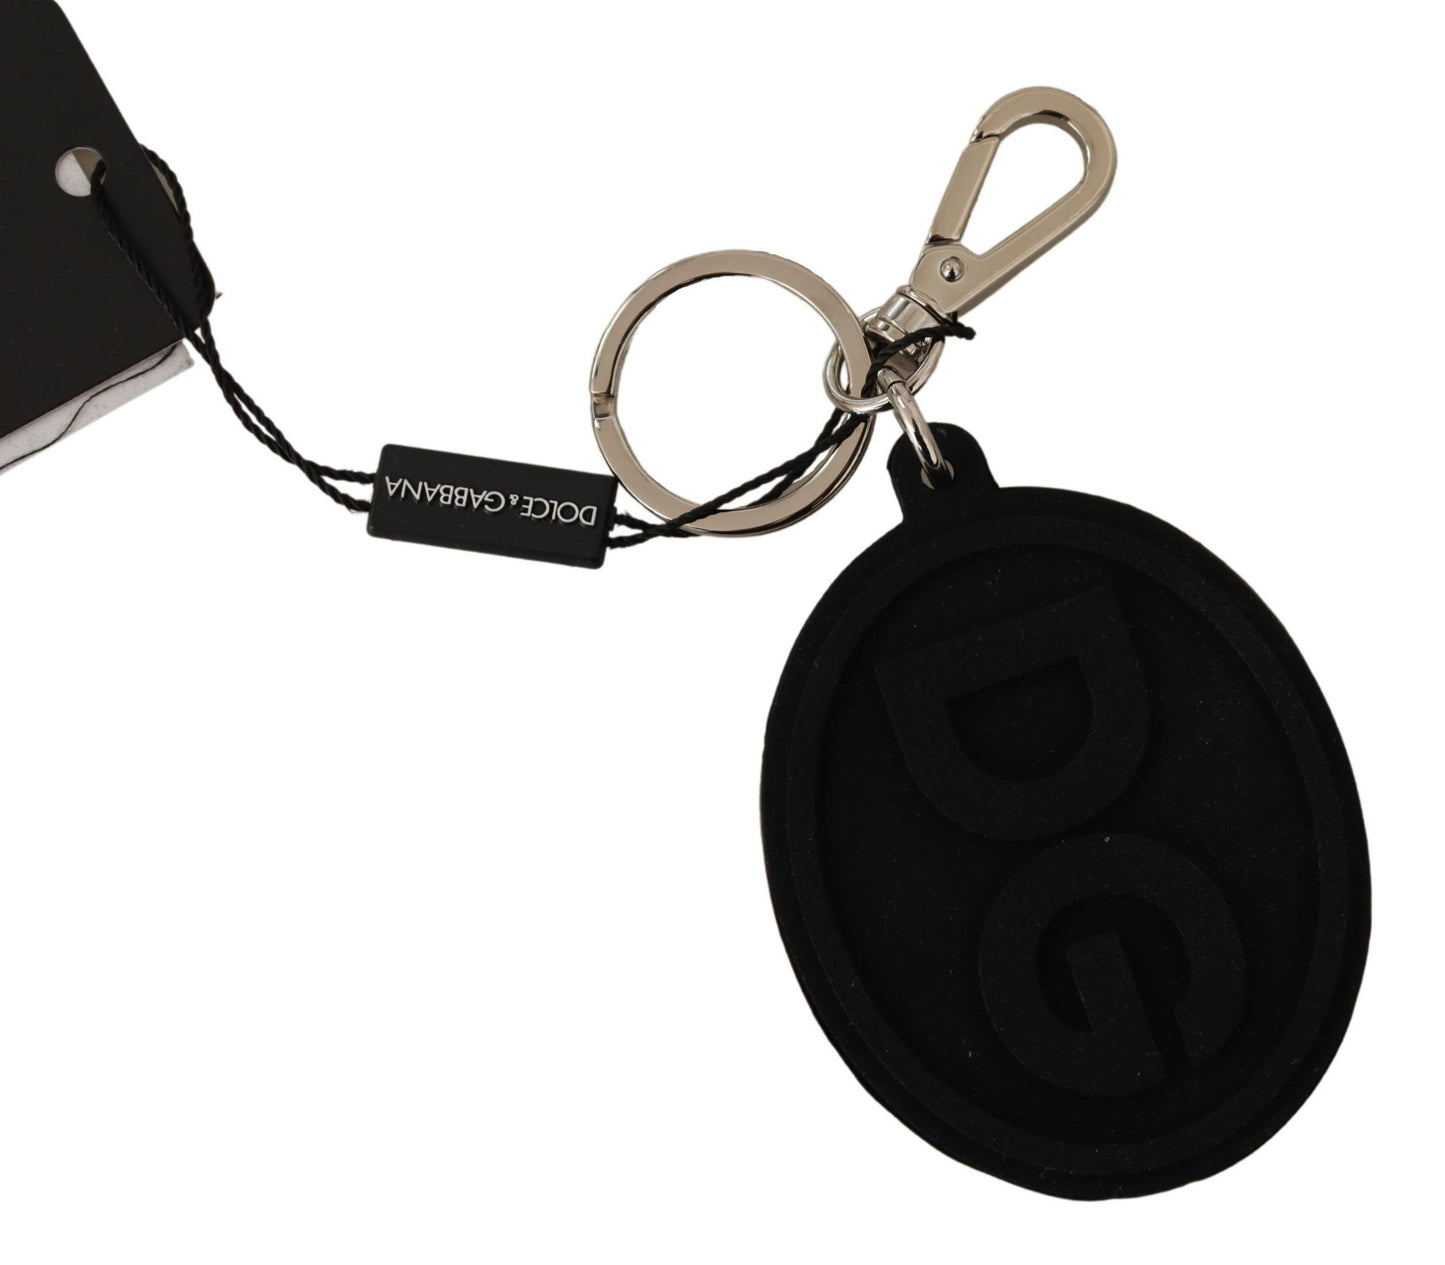 Black Rubber DG Logo Silver Brass Metal Keychain